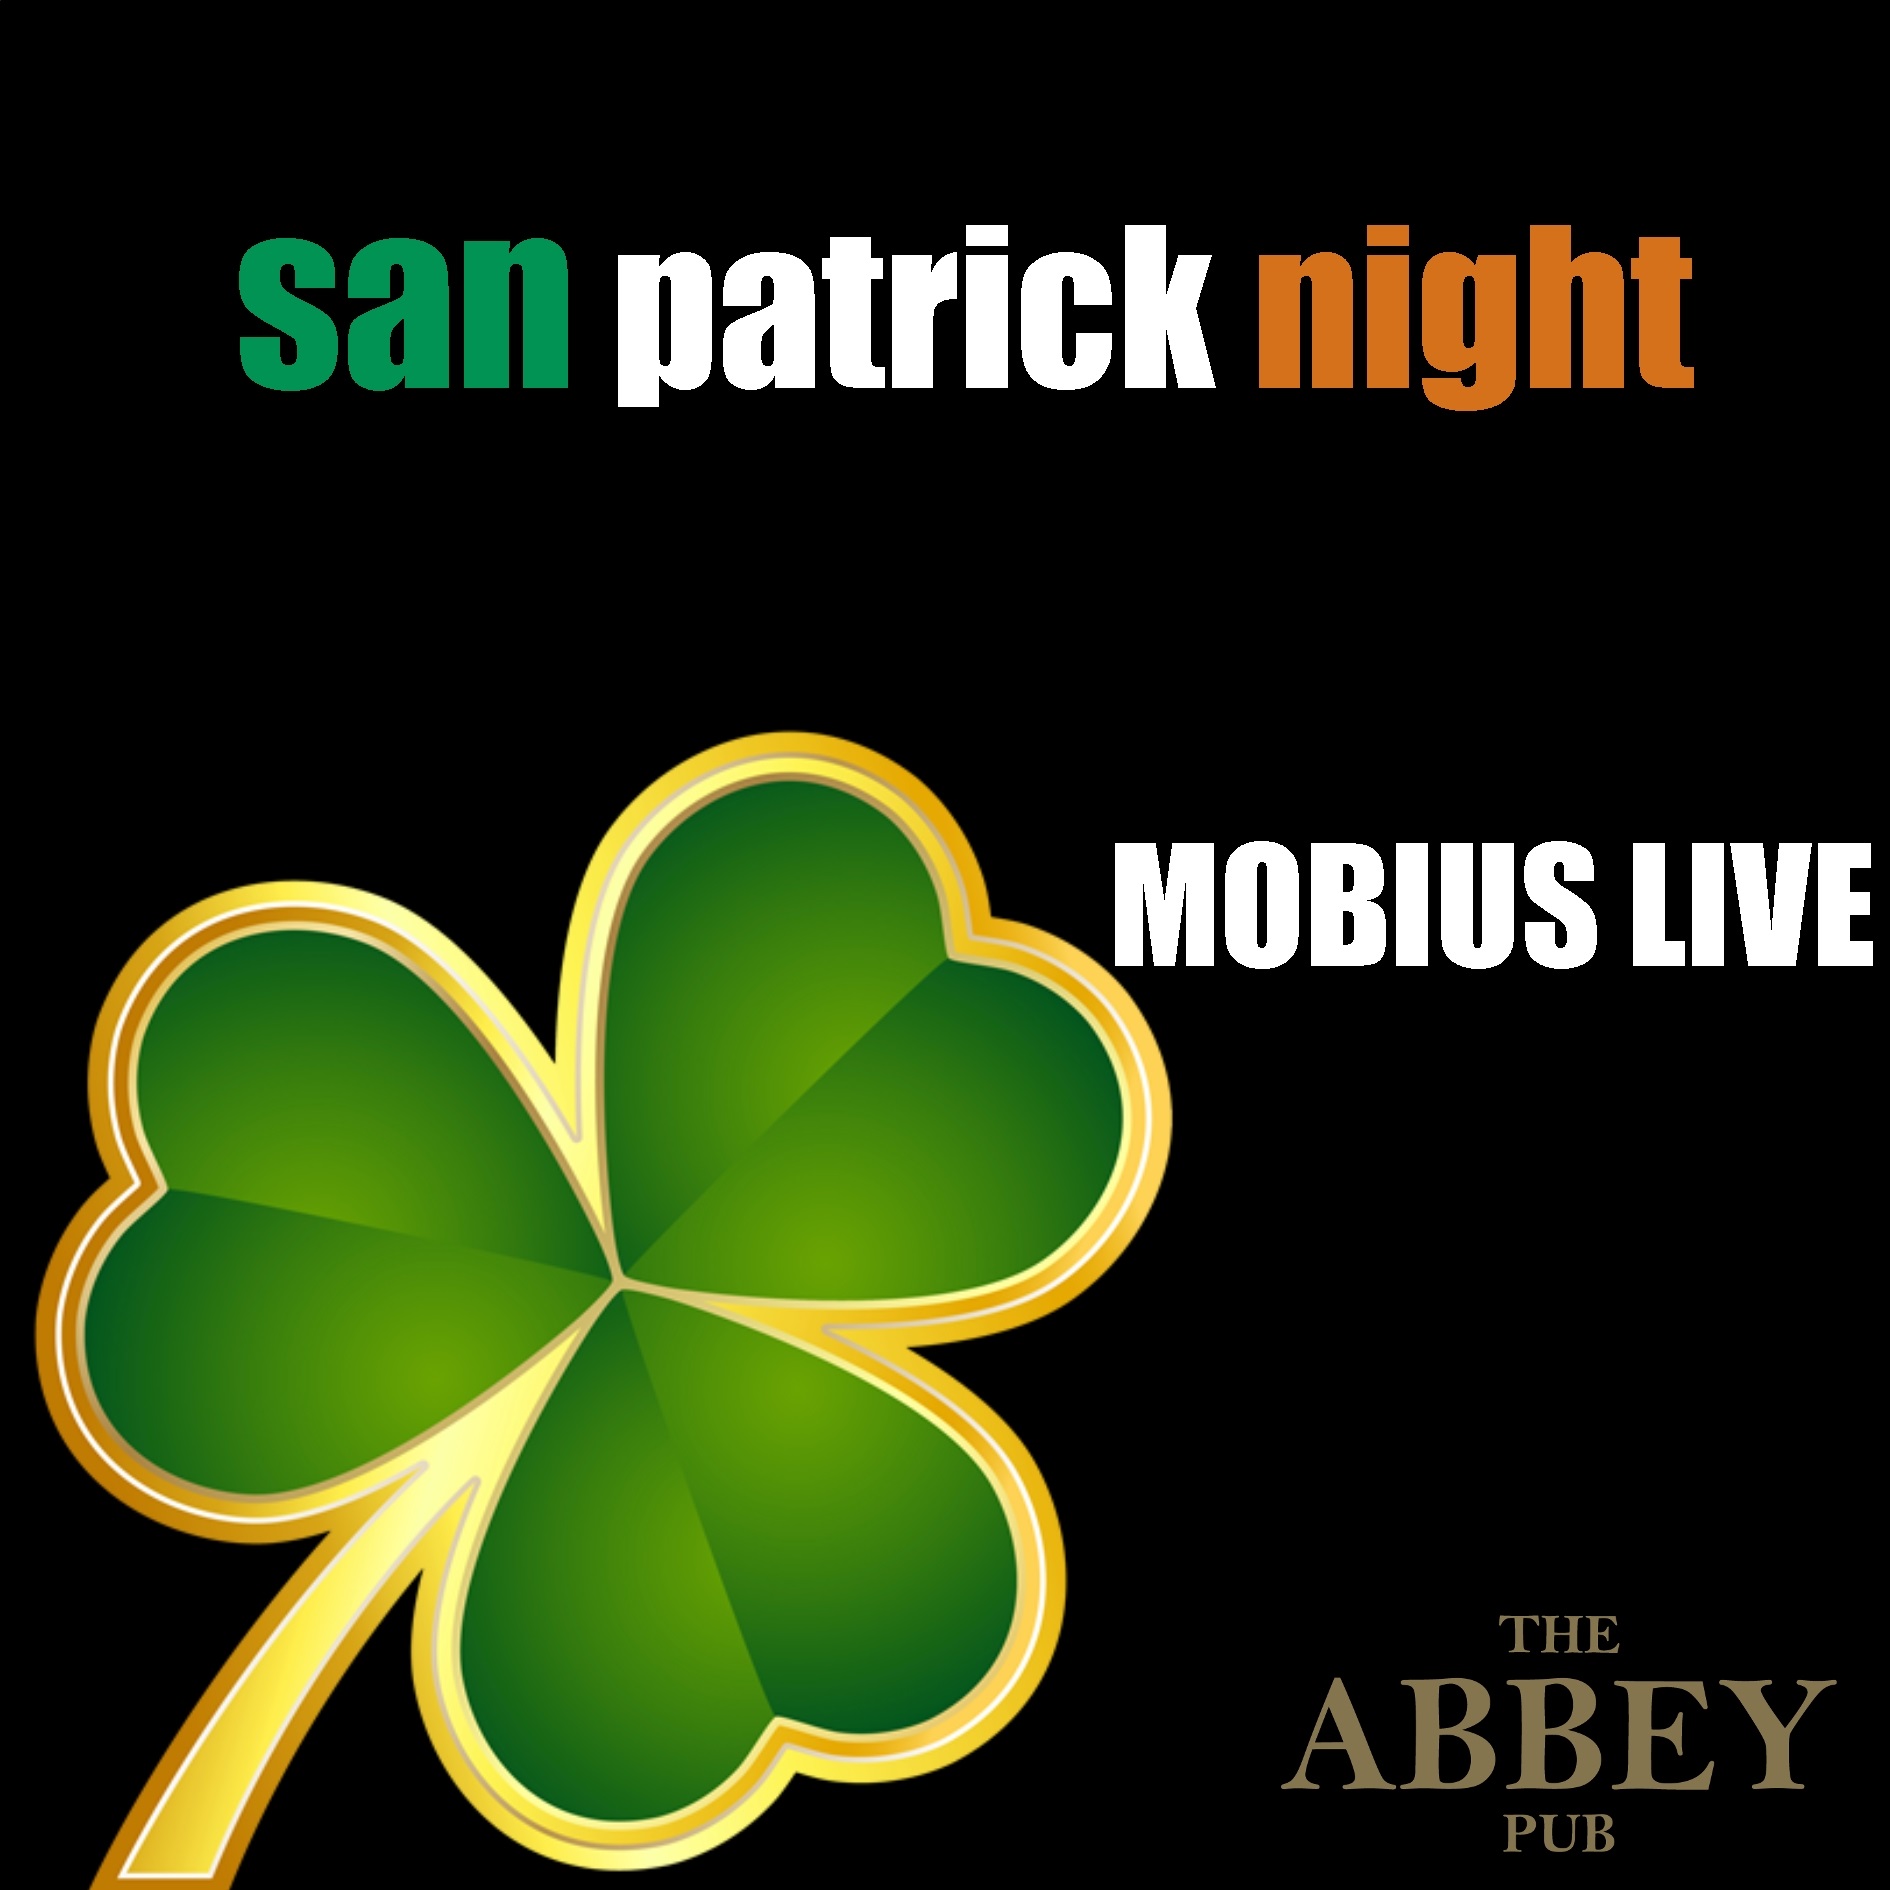 San Patrick night The Abbey Pub